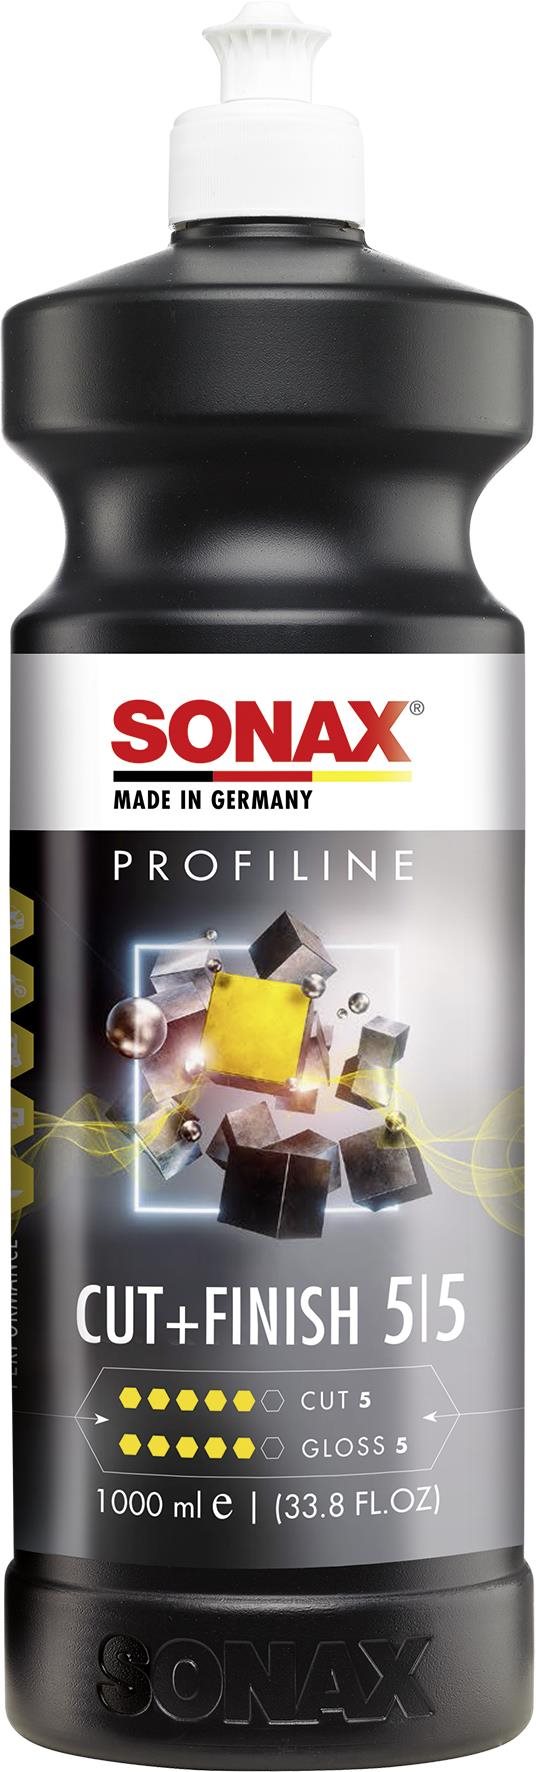 Sonax Profiline Cut & Finish 5/5